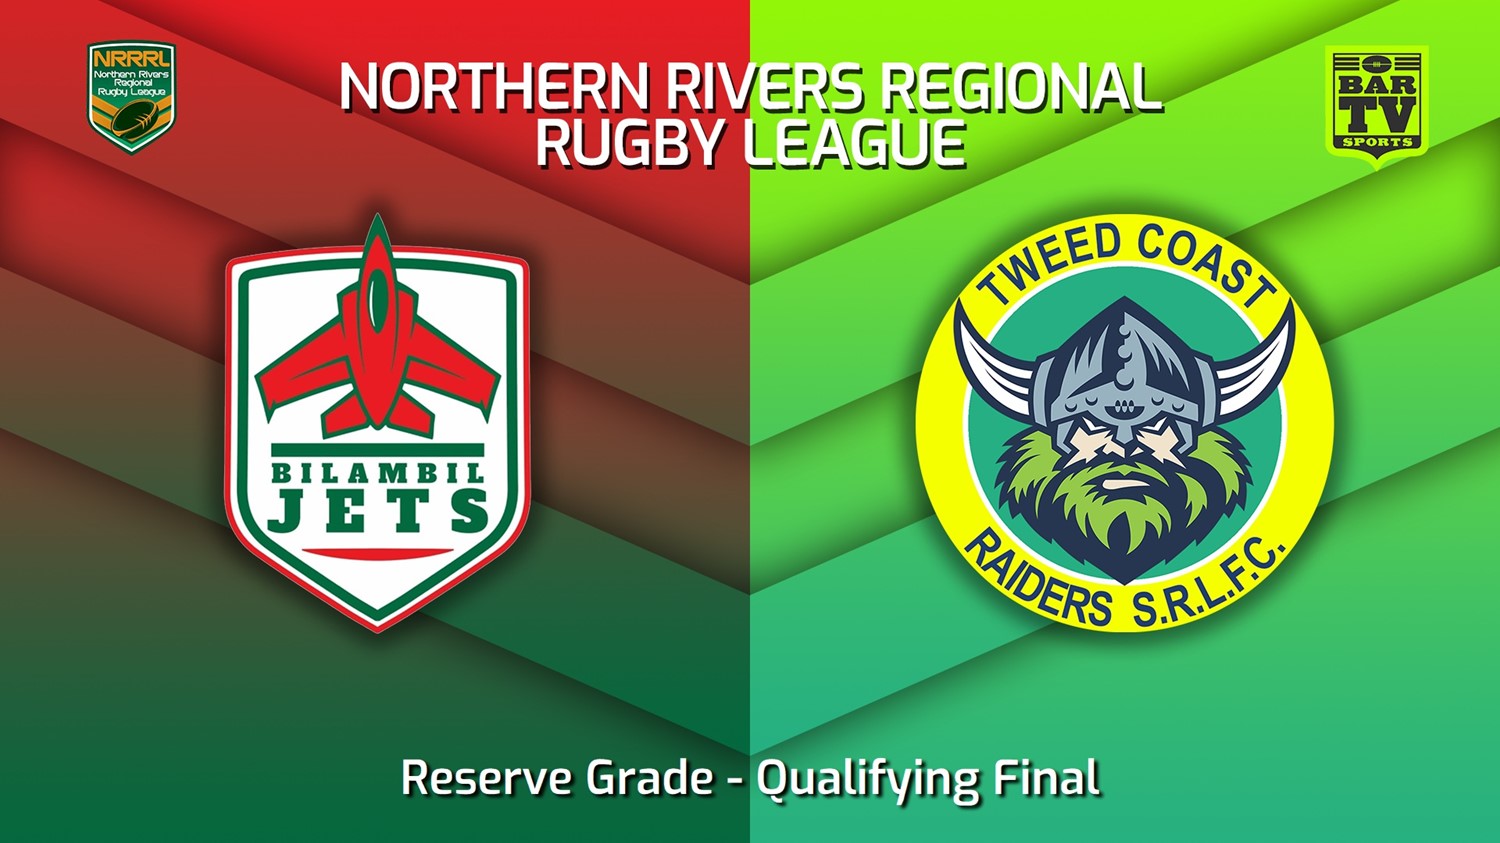 220814-Northern Rivers Qualifying Final - Reserve Grade - Bilambil Jets v Tweed Coast Raiders Slate Image